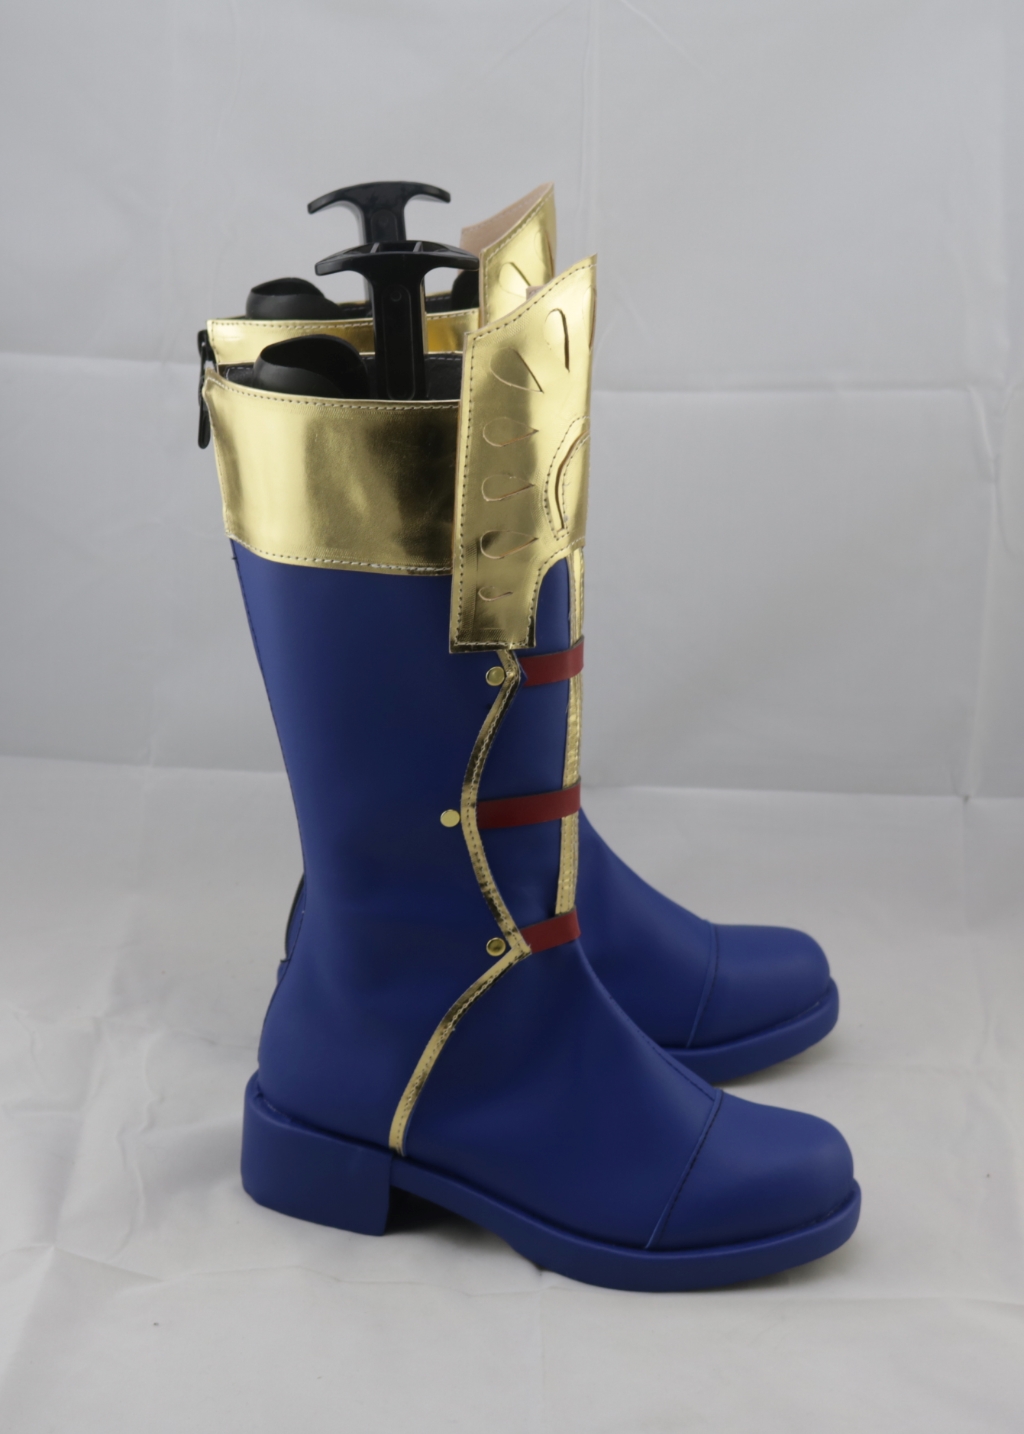 Shoto Todoroki Shoes Men My Hero Academia Boots Cosplay Blue Ver